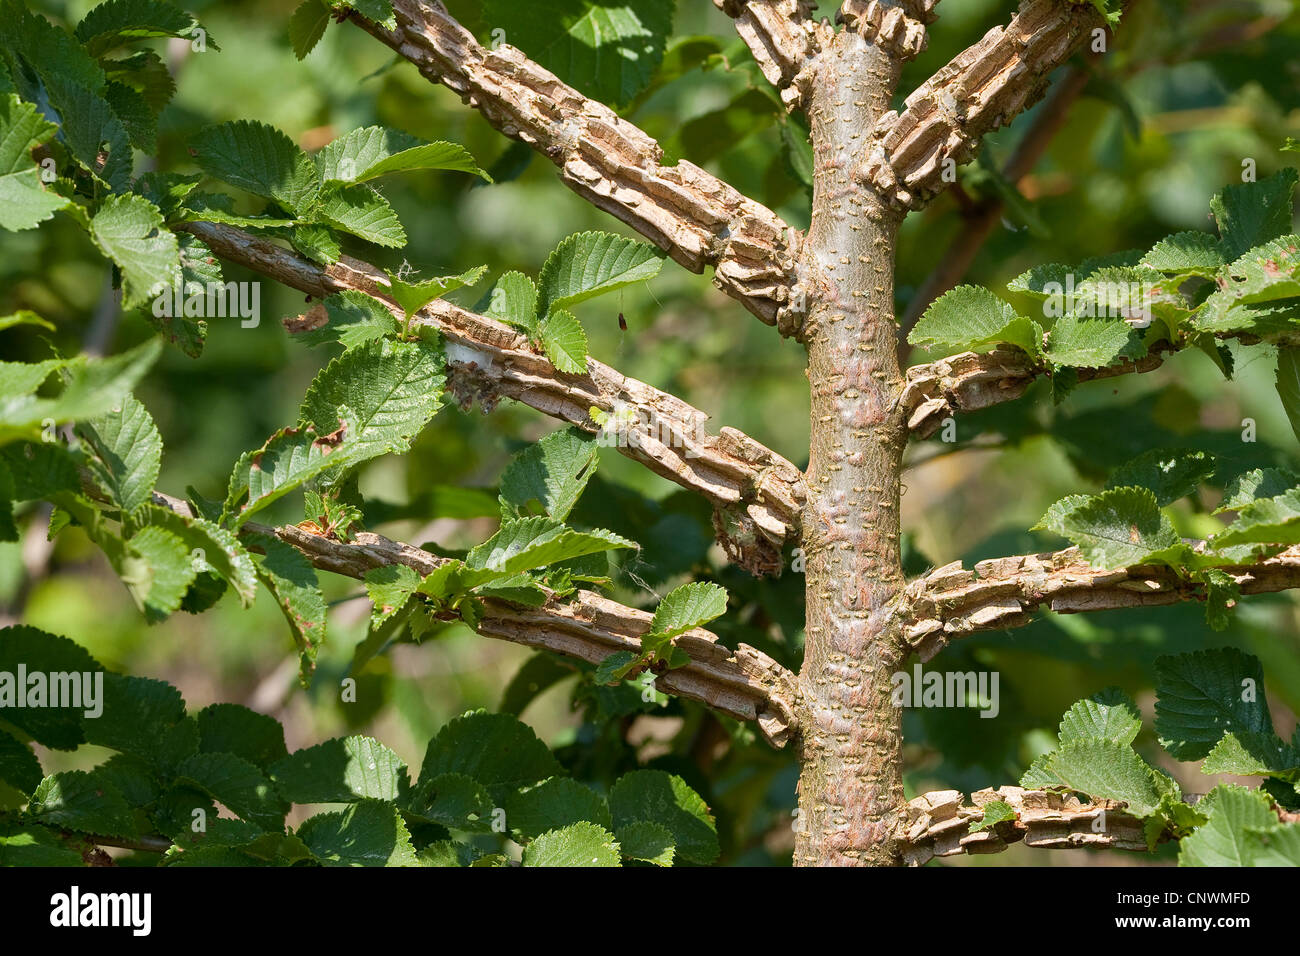 smooth-leaf elm (Ulmus minor, Ulmus campestris, Ulmus carpinifolia), branch with cork ledges, Germany Stock Photo